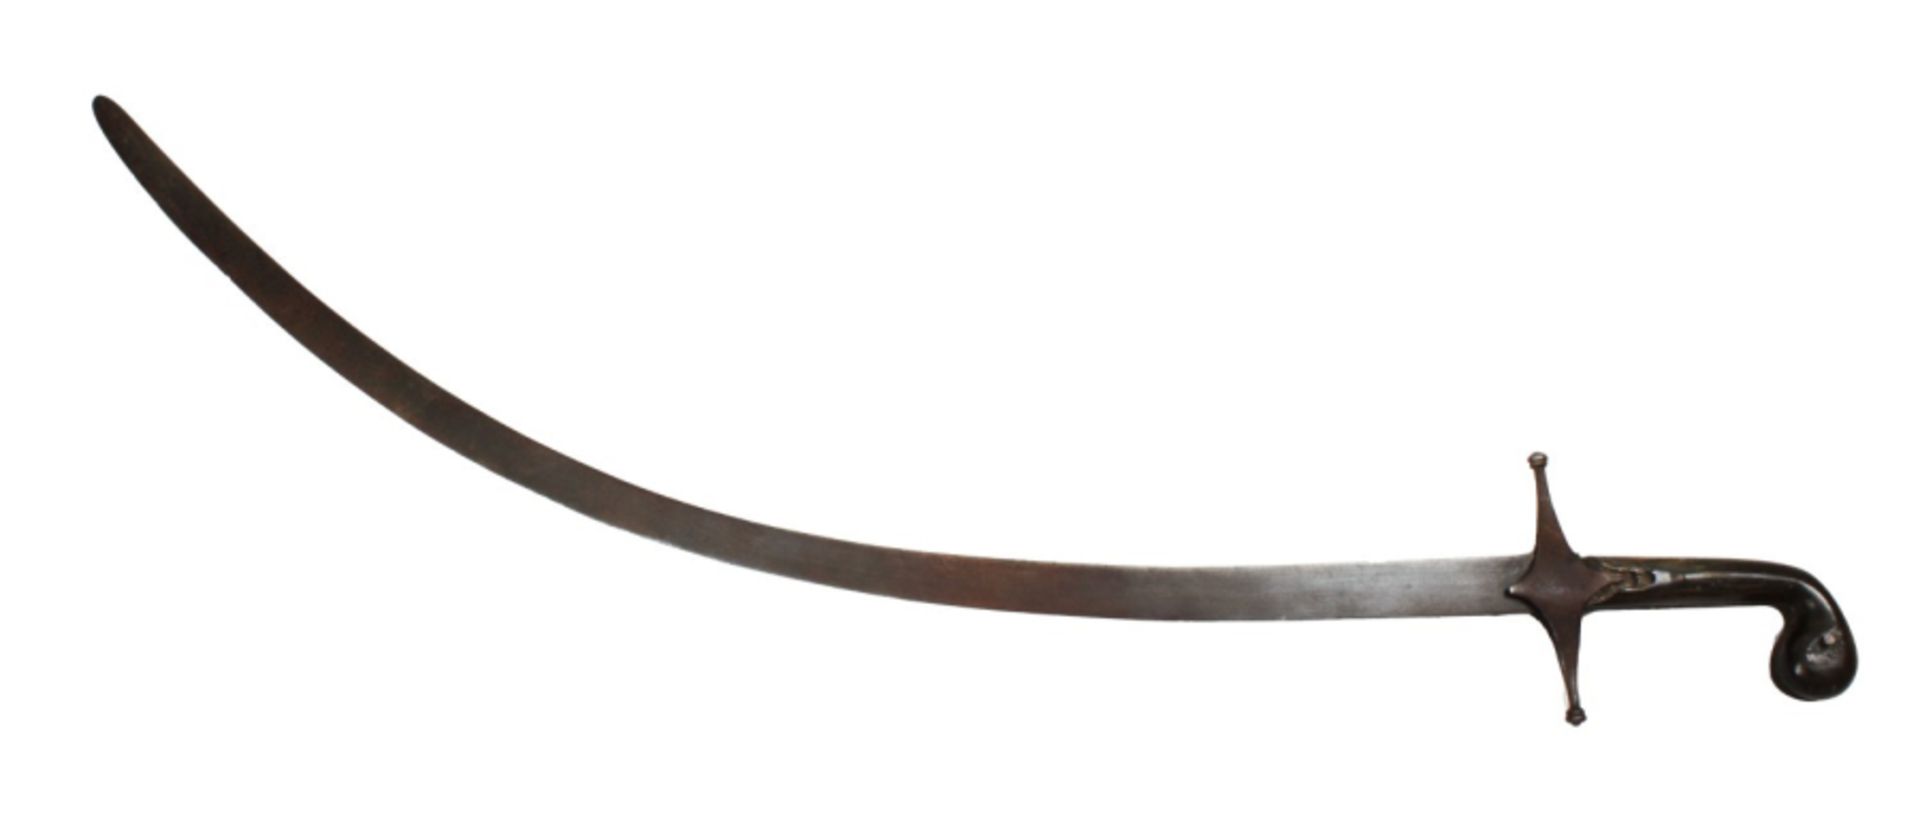 19th century Shamshir sword - Image 3 of 6